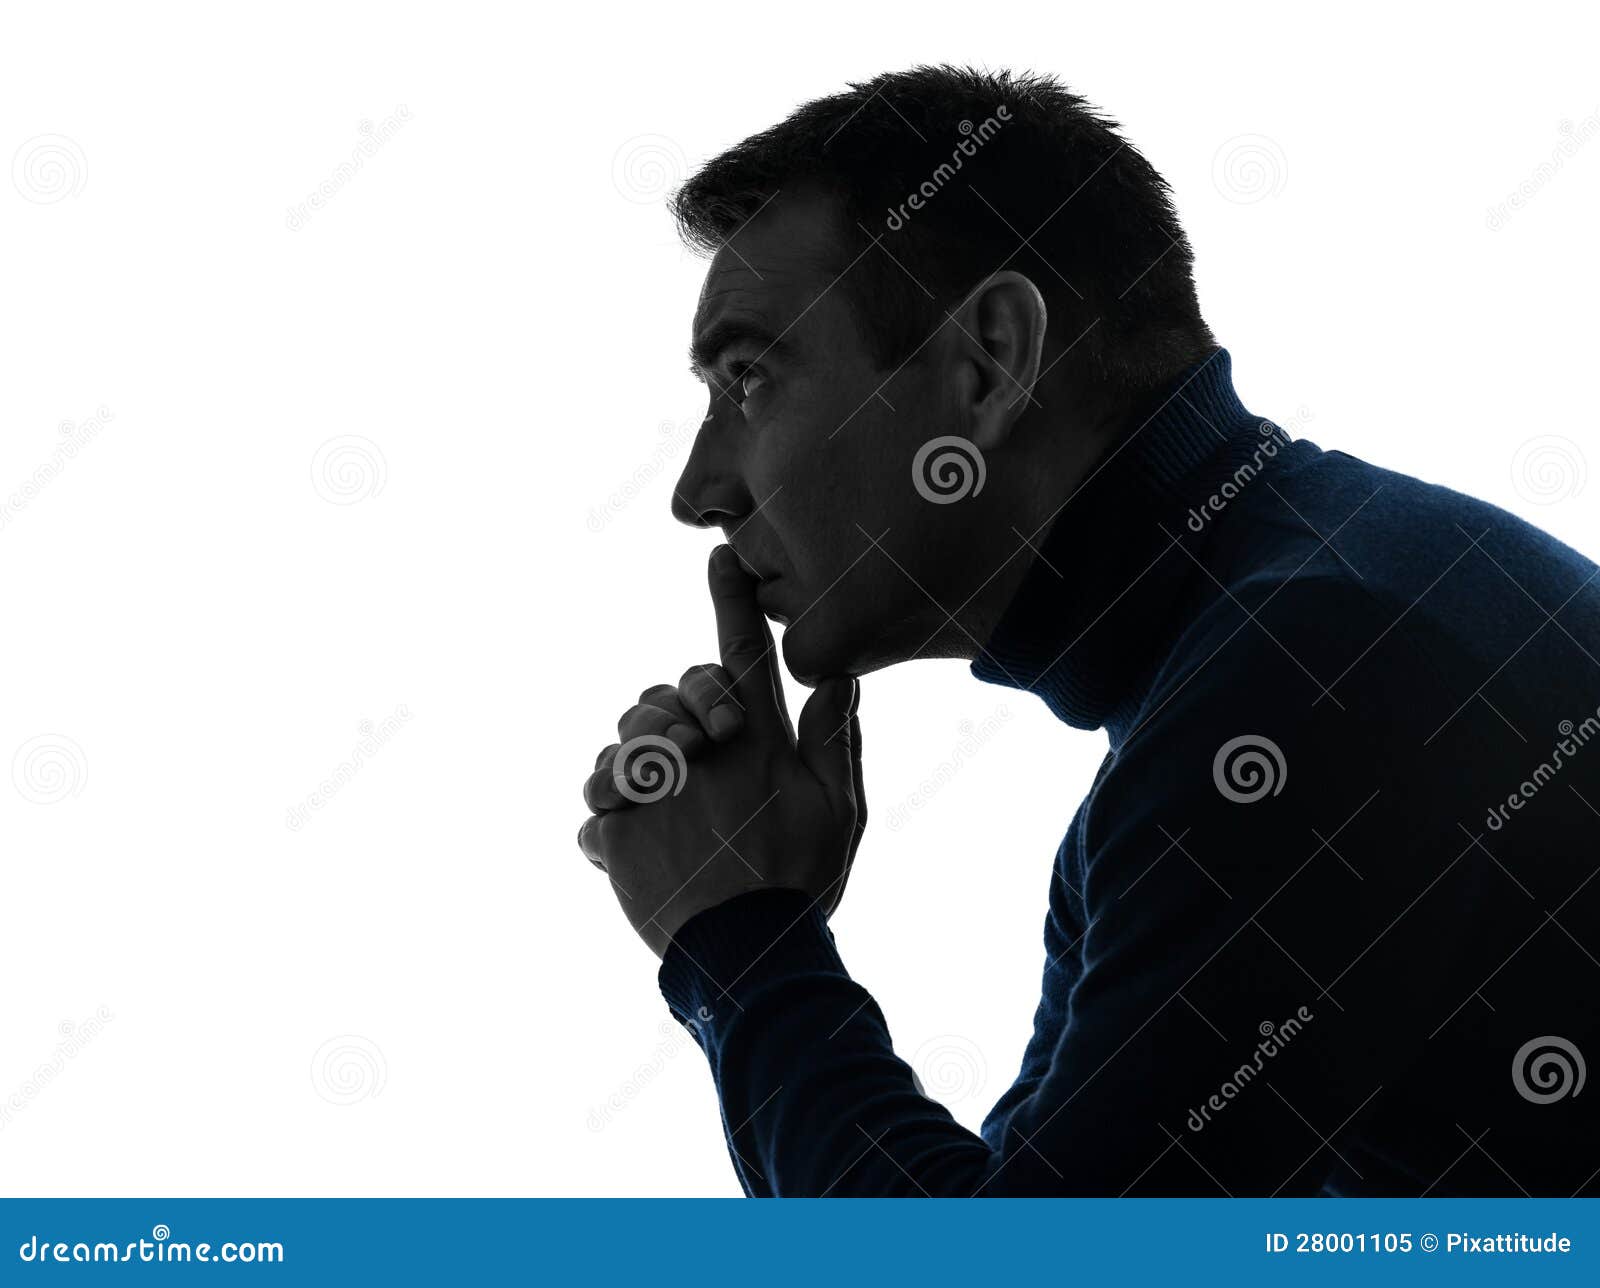 man serious thinking pensive silhouette portrait